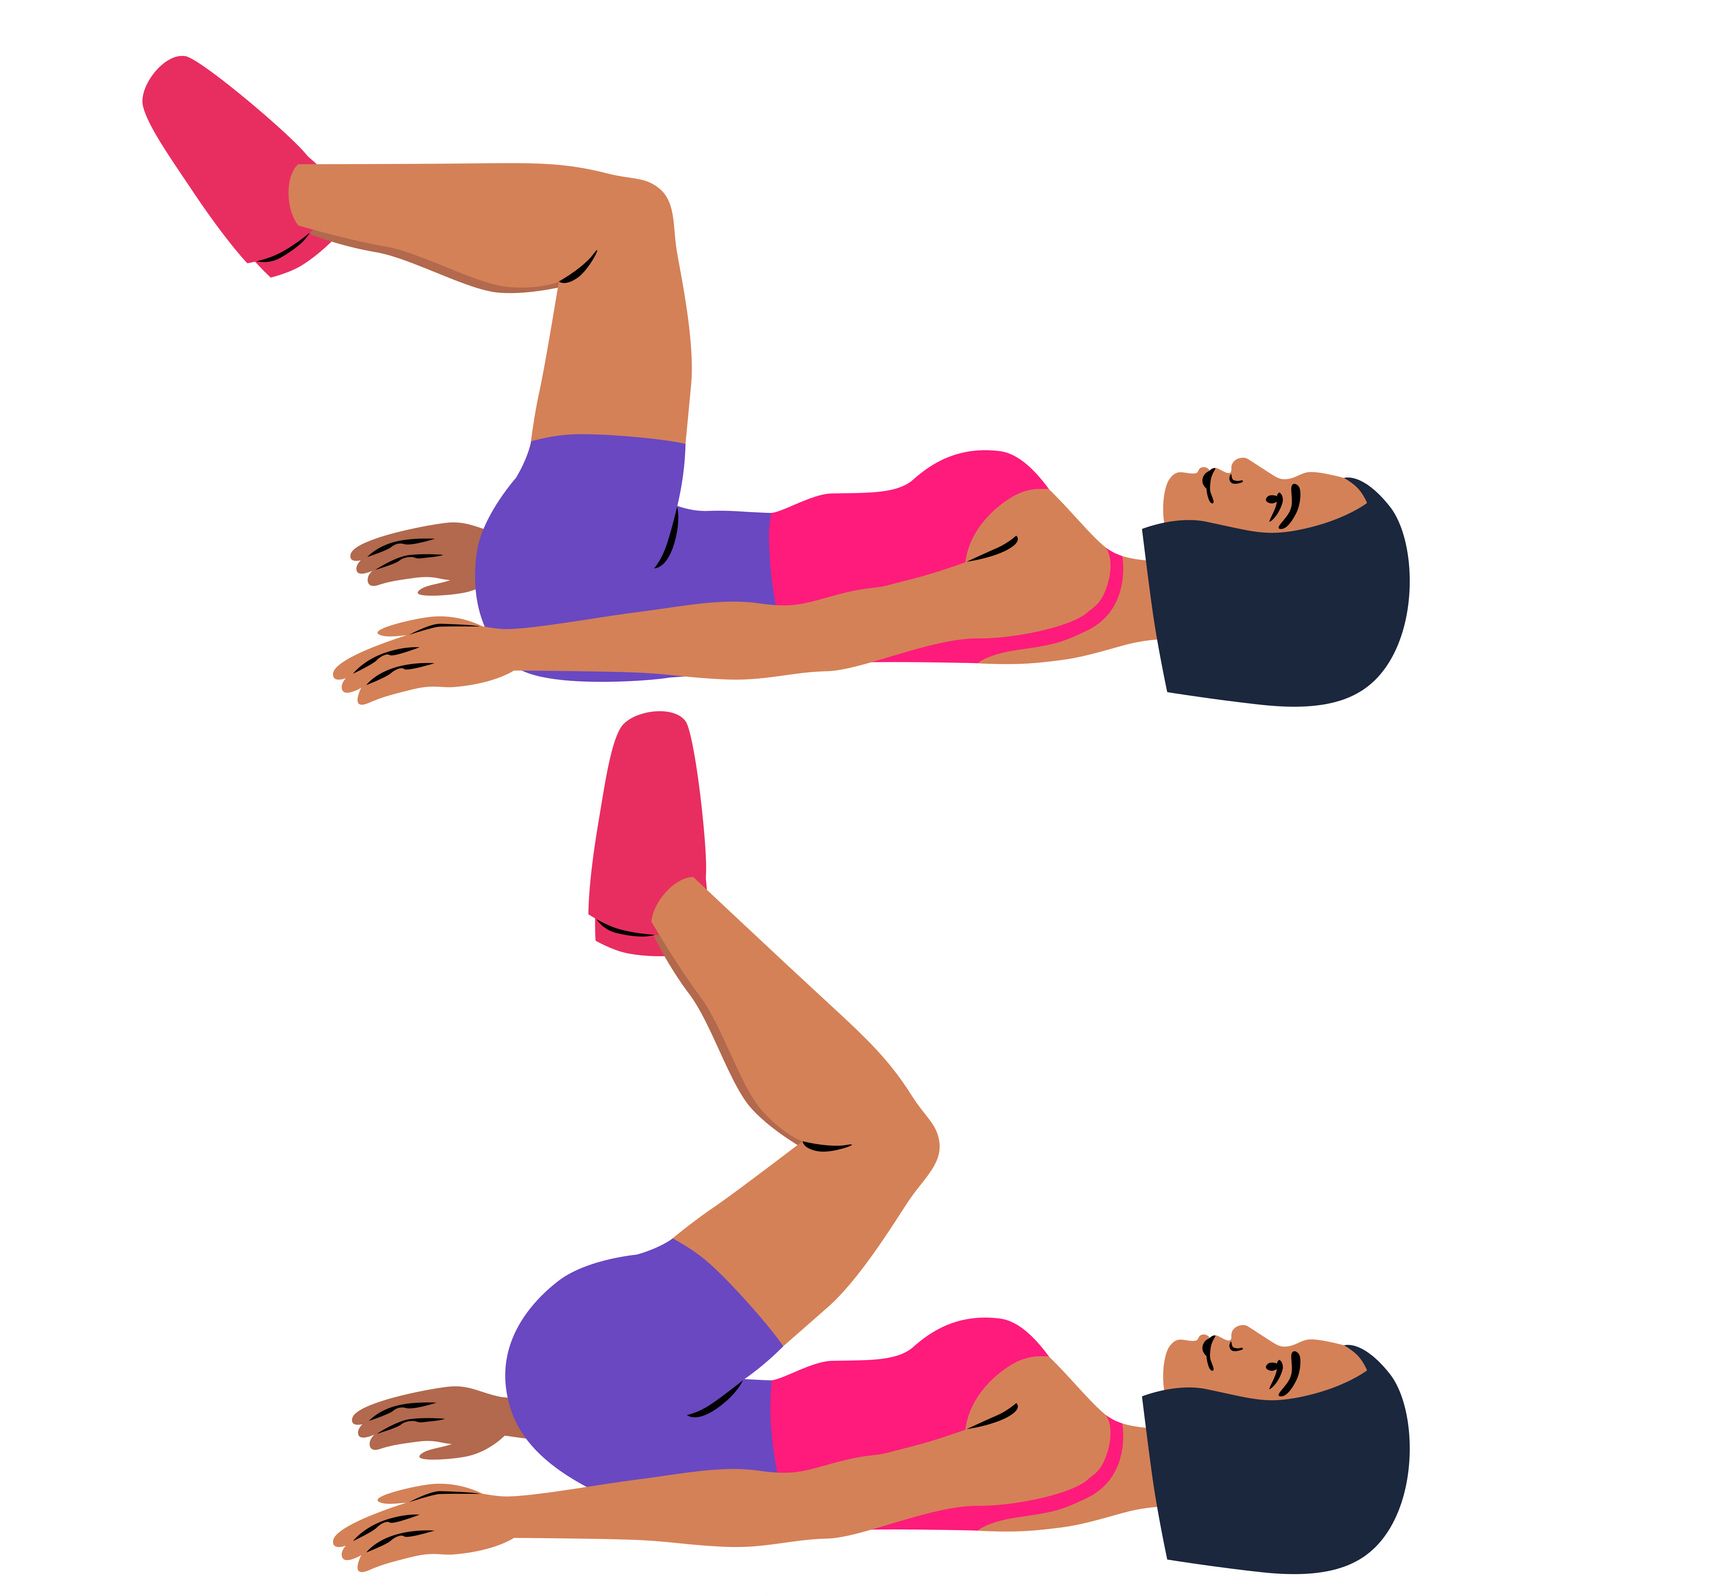 Abdos femme : exercices d'abdominaux pour muscler son ventre